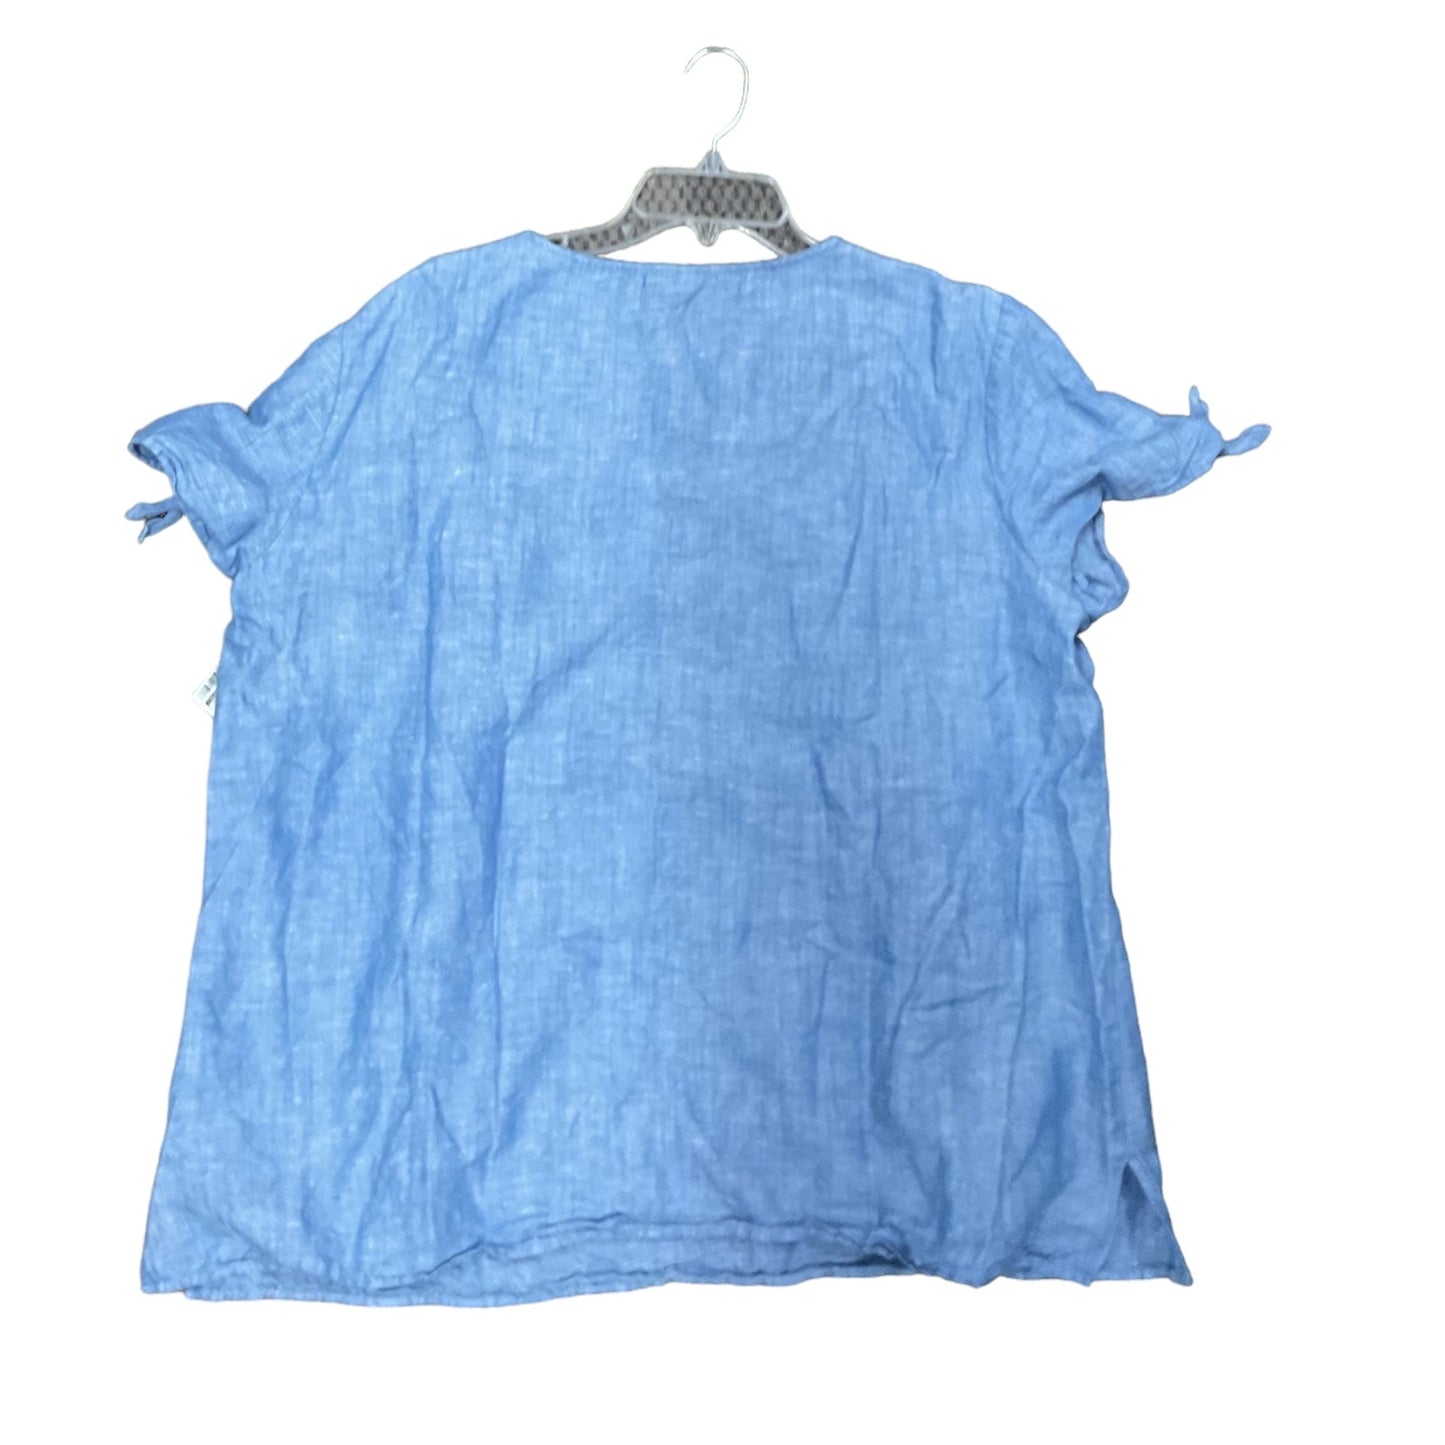 Blue Denim Top Short Sleeve Talbots, Size 2x